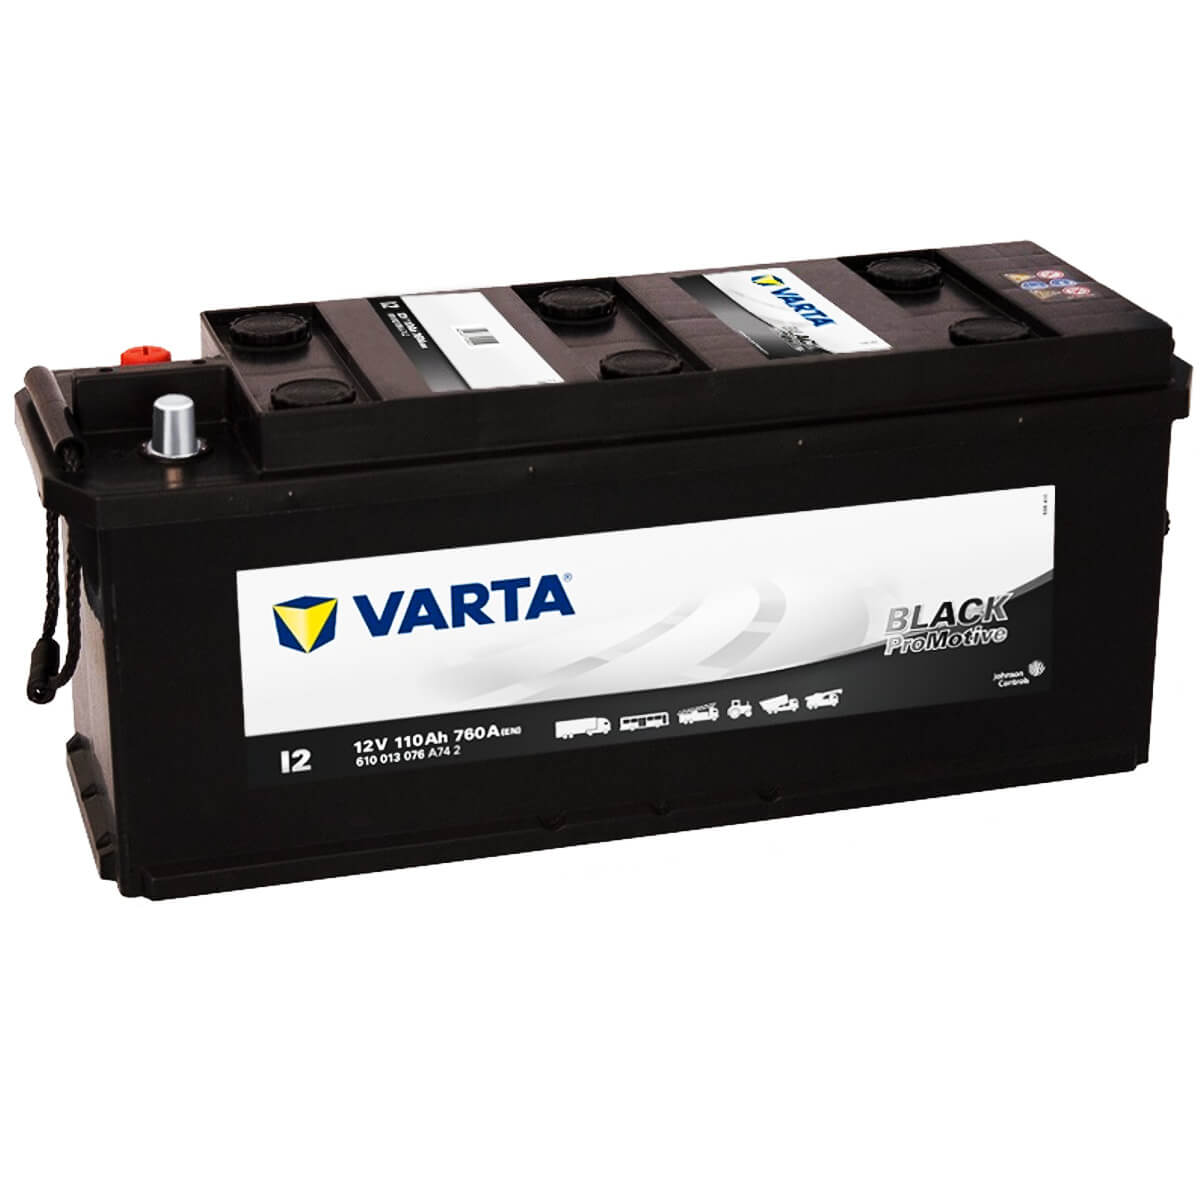 Varta I2 Promotive Black 12V 110Ah 760A/EN